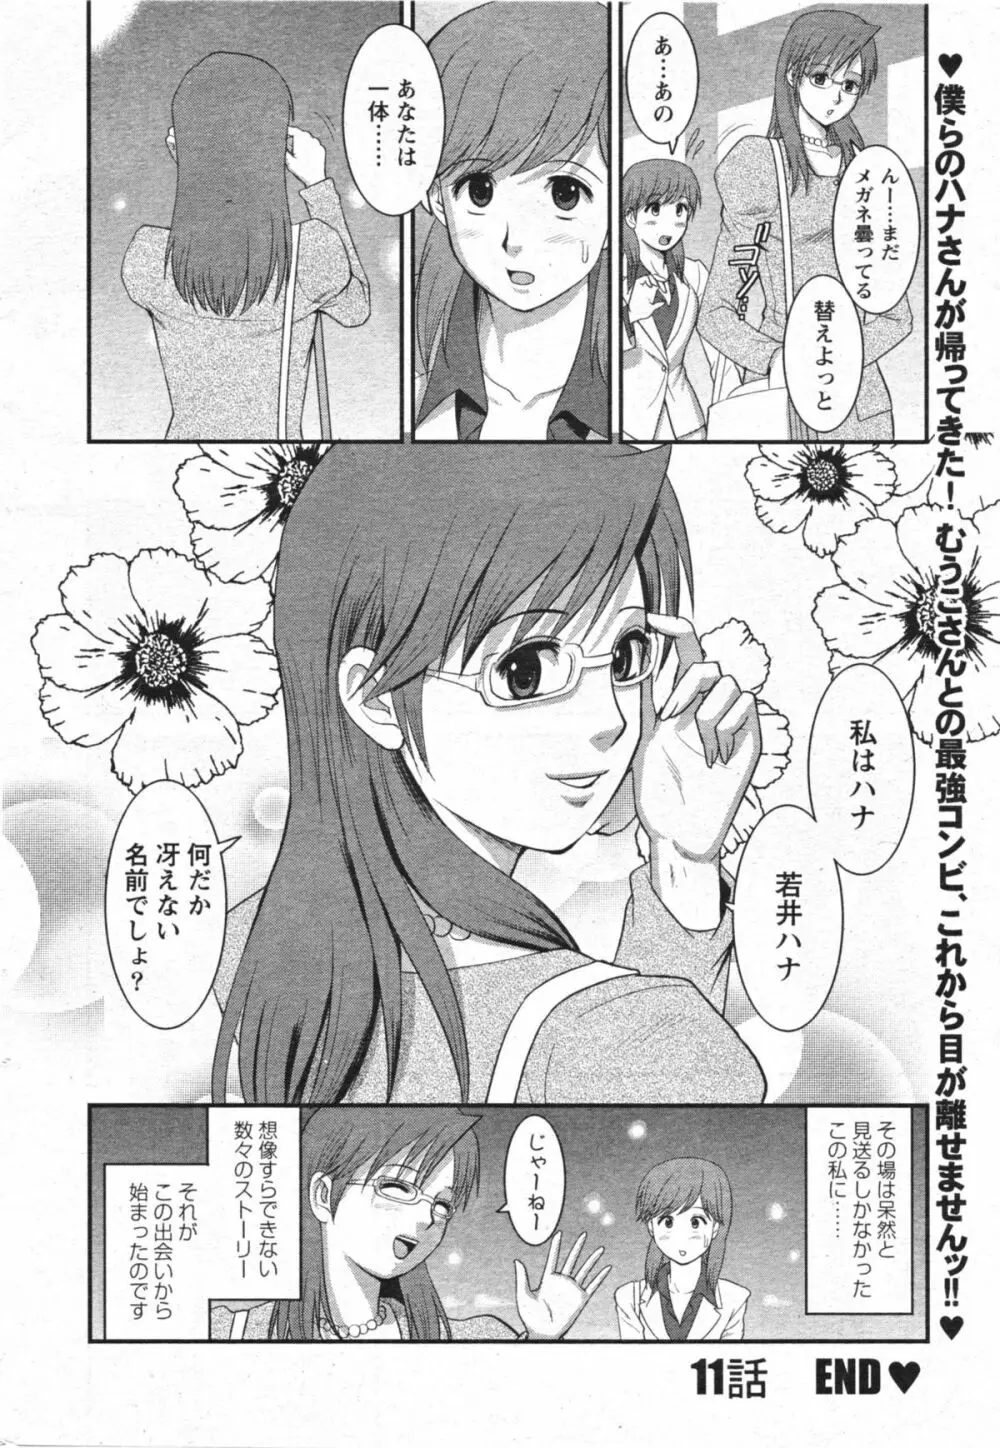 Haken no Muuko San 11 21ページ